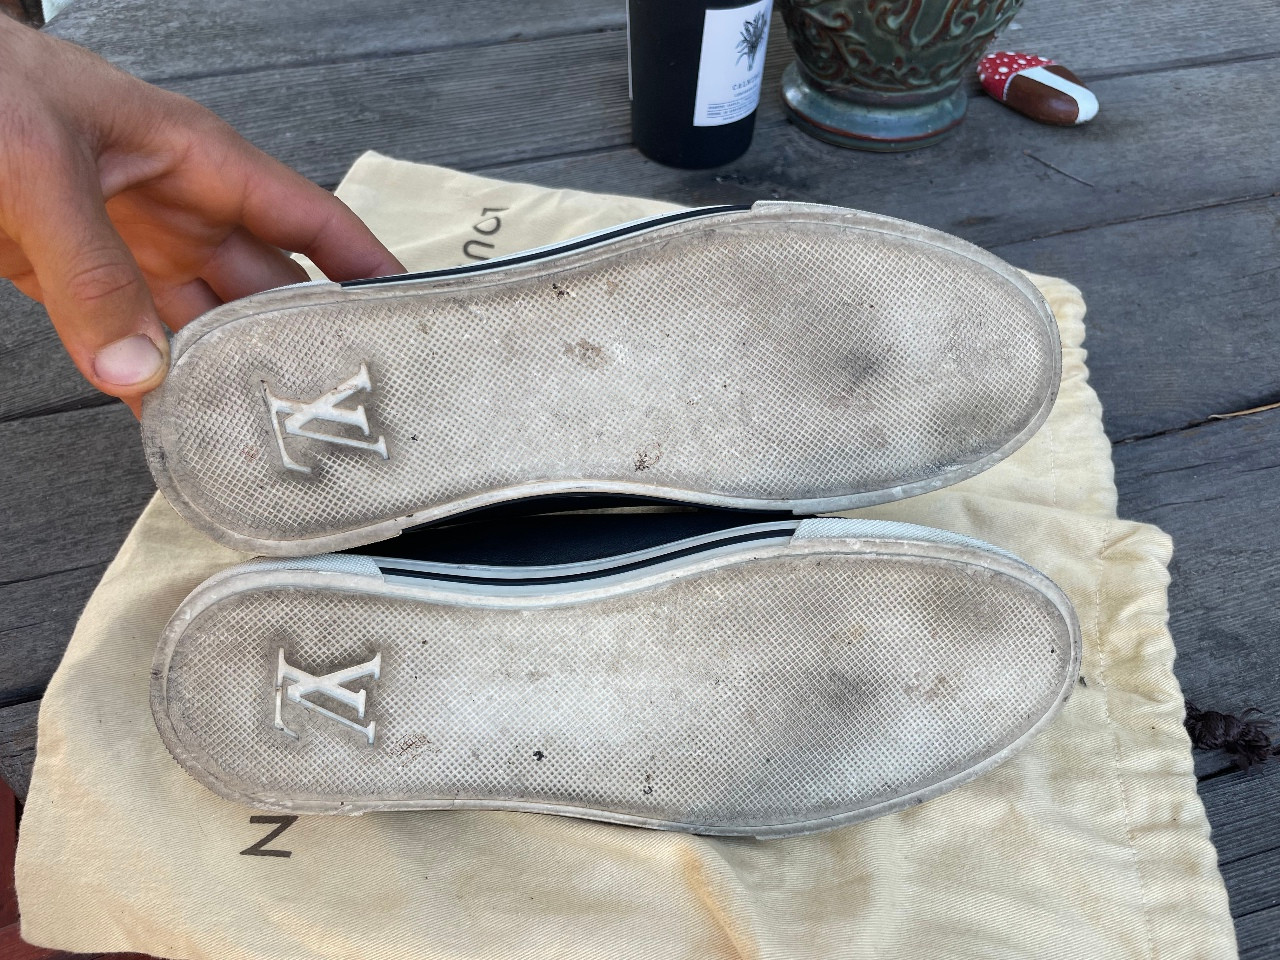 Lous Sneaker - Shoes